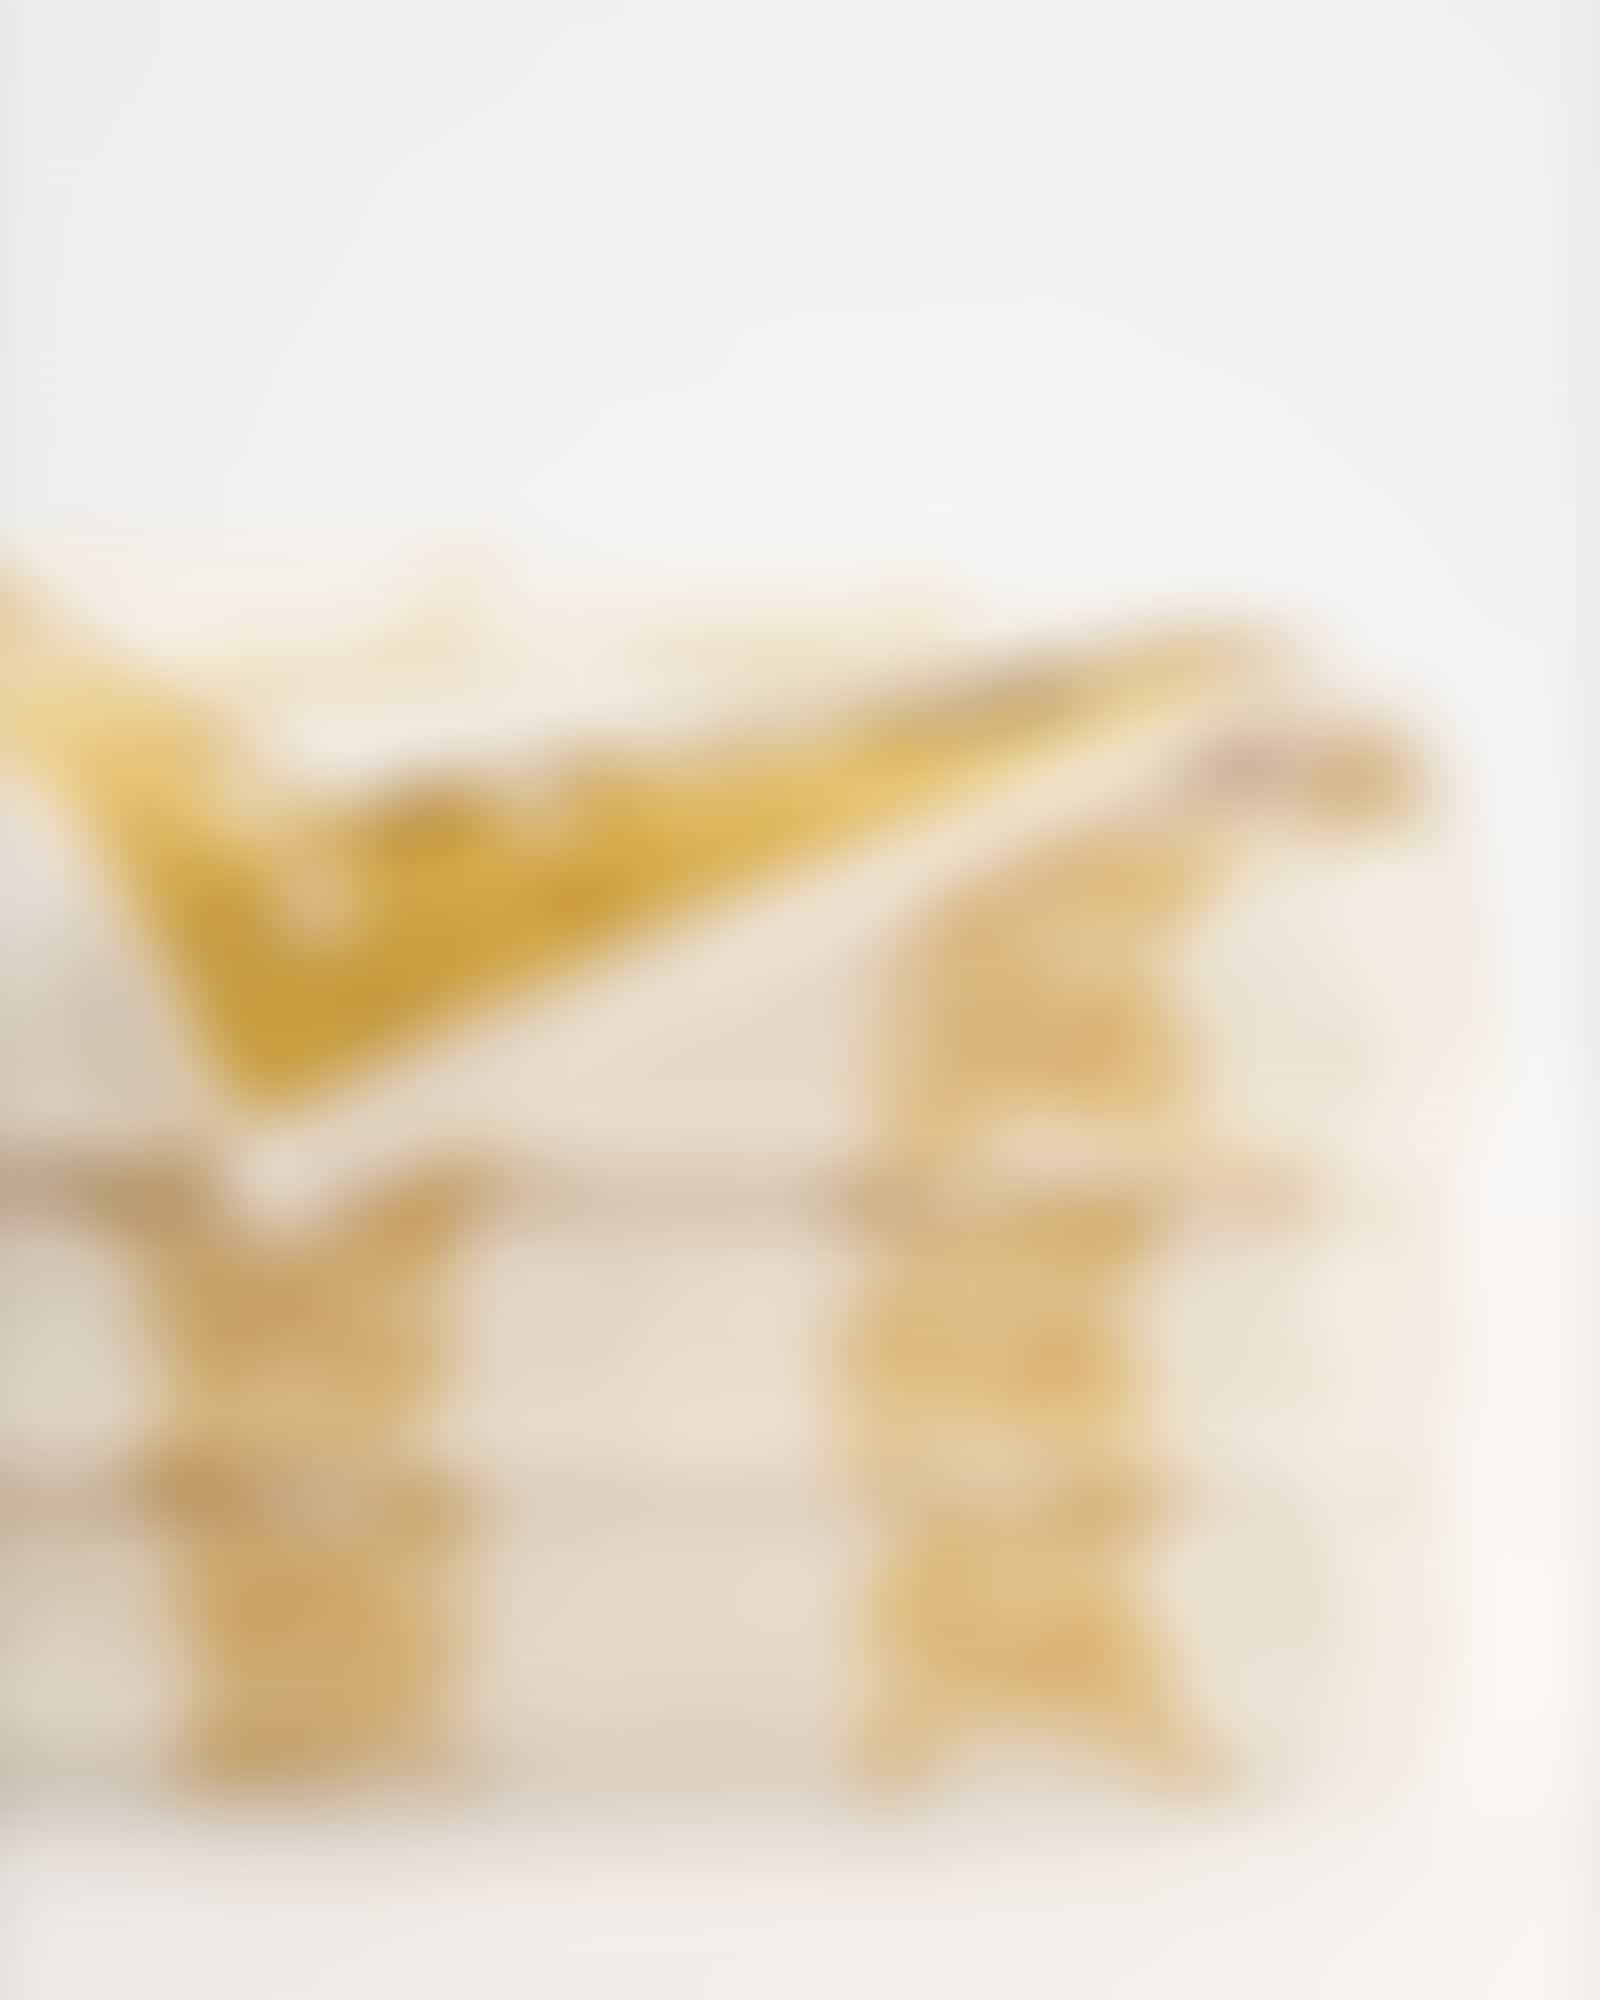 JOOP! Classic - Cornflower 1611 - Farbe: Amber - 35 - Waschhandschuh 16x22 cm Detailbild 2